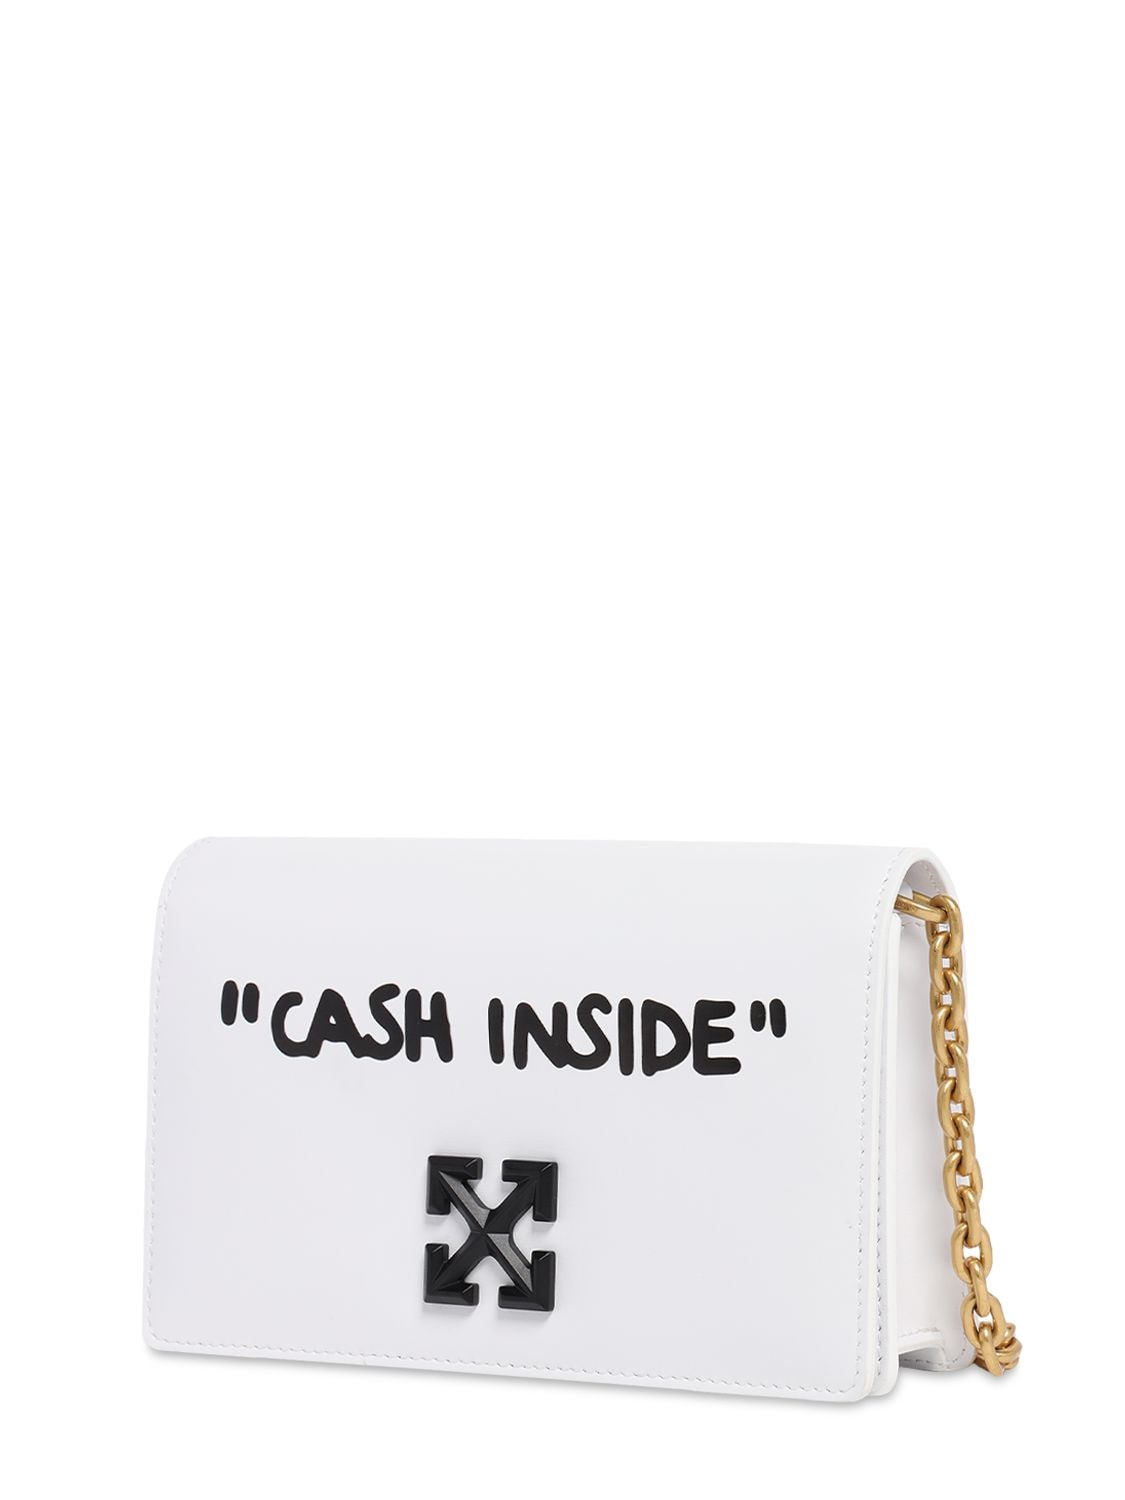 Off-White Jitney Cash Inside Top-Handle Bag, Black/White